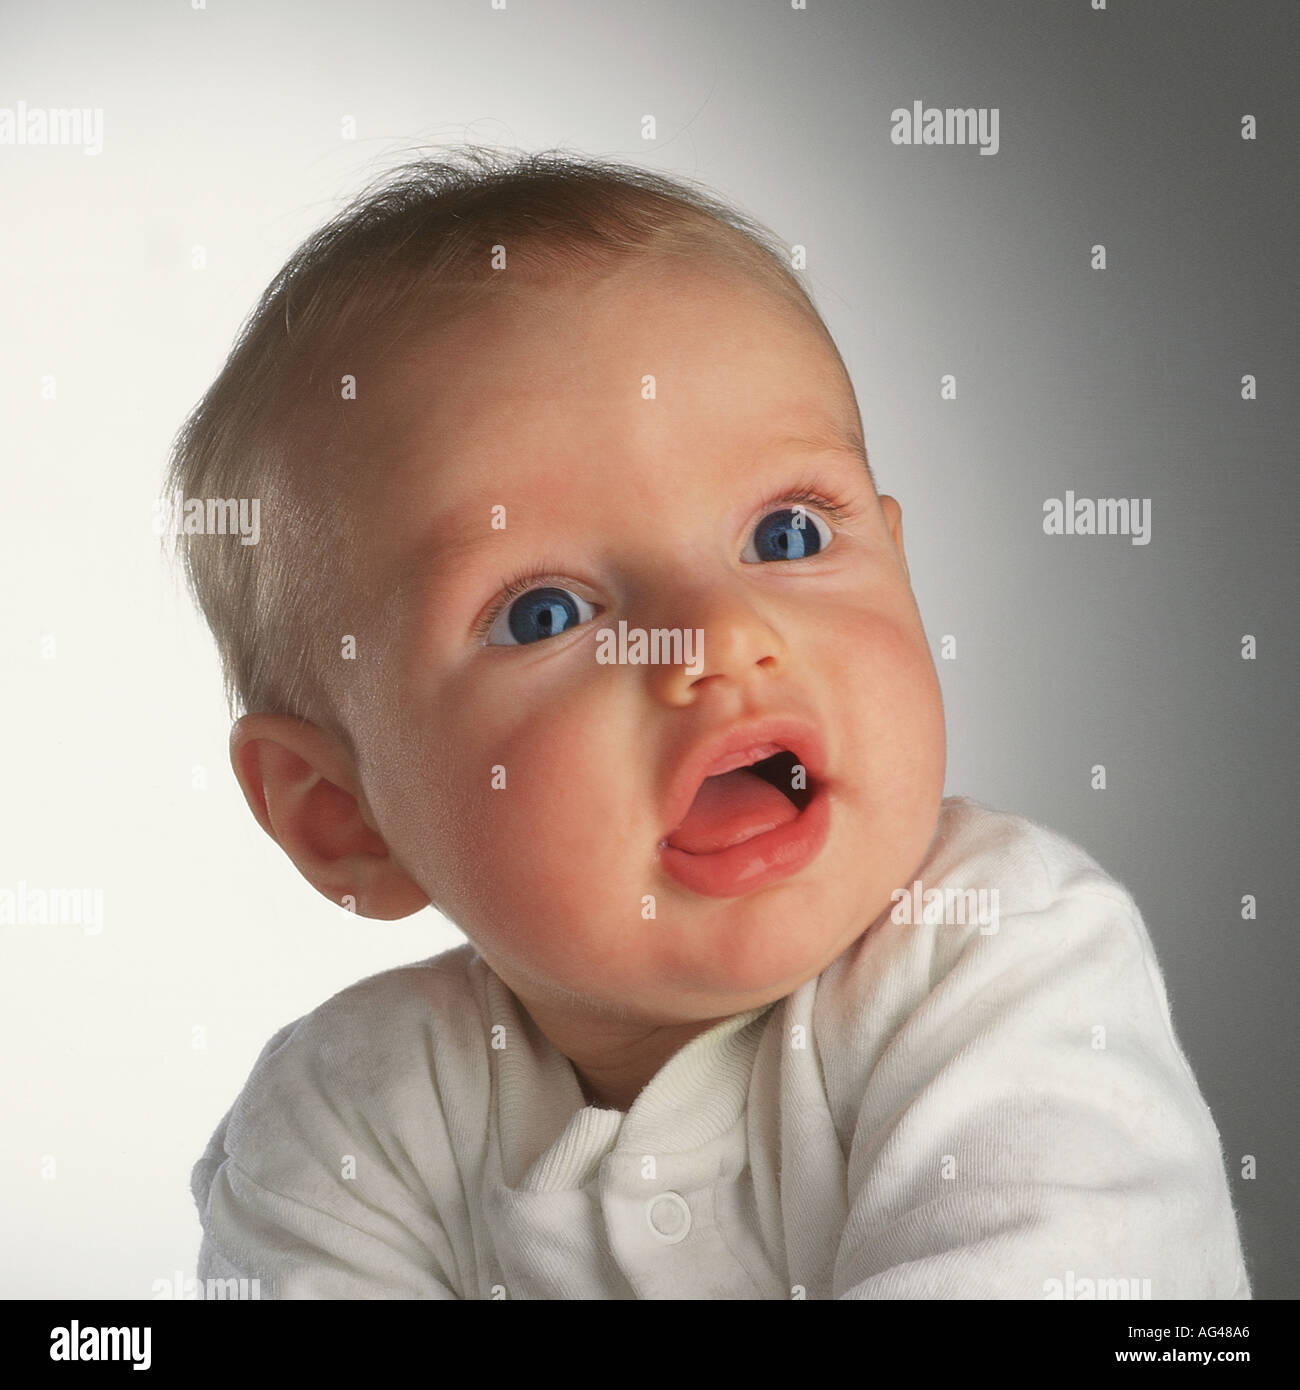 six month old baby boy looking up. No teeth. Big eyes. Studio shot, plain background. Stock Photo